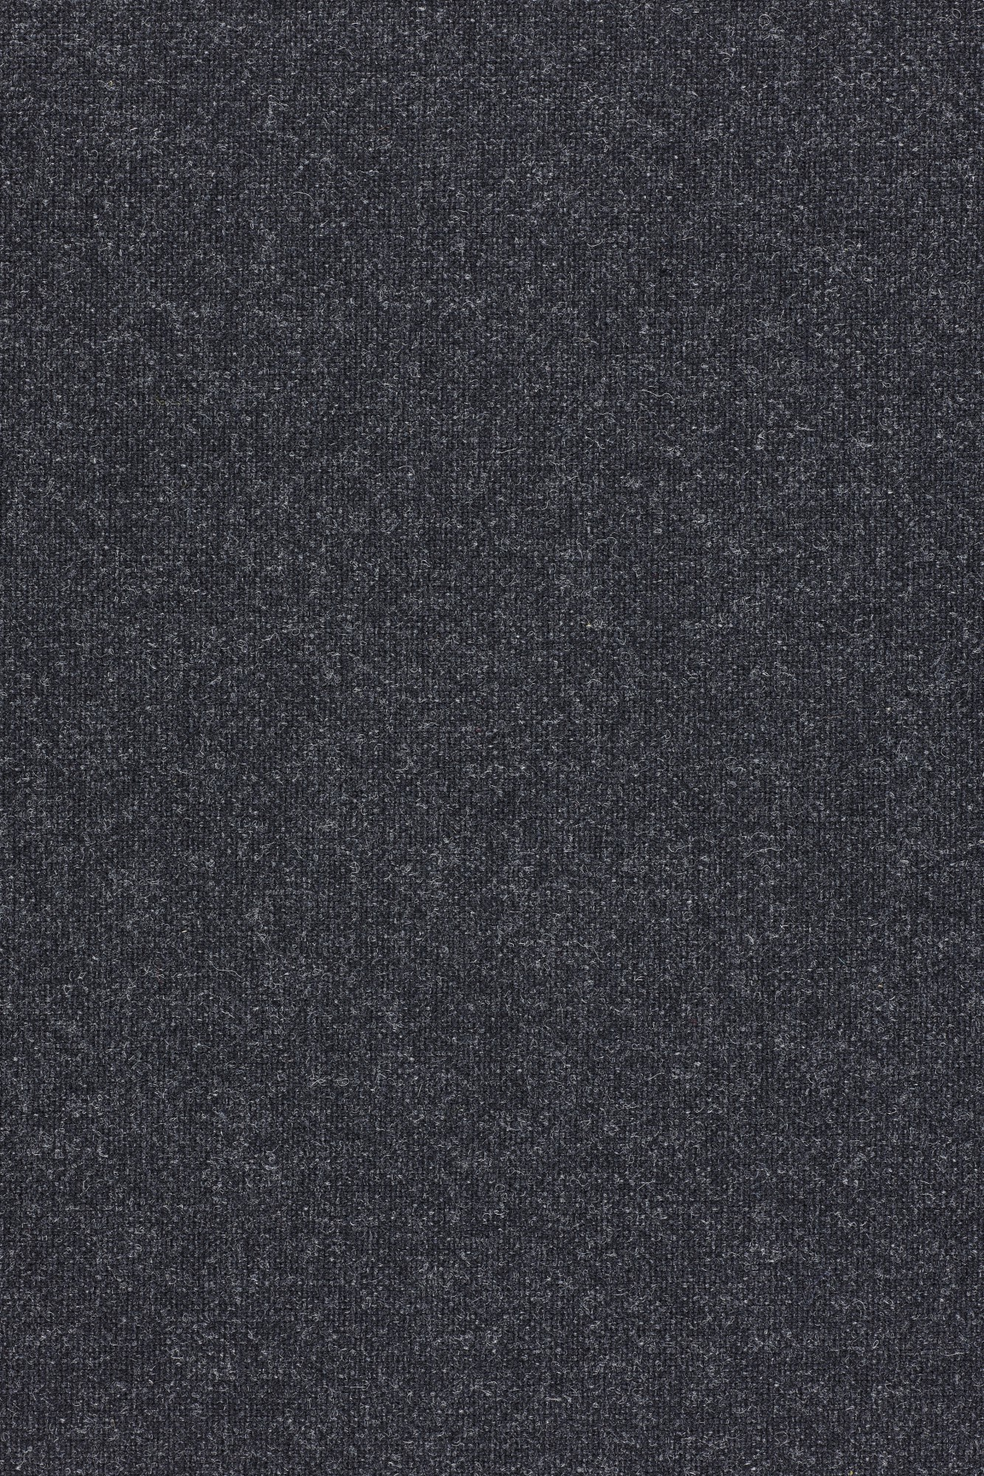 Fabric sample Tonica 2 192 grey